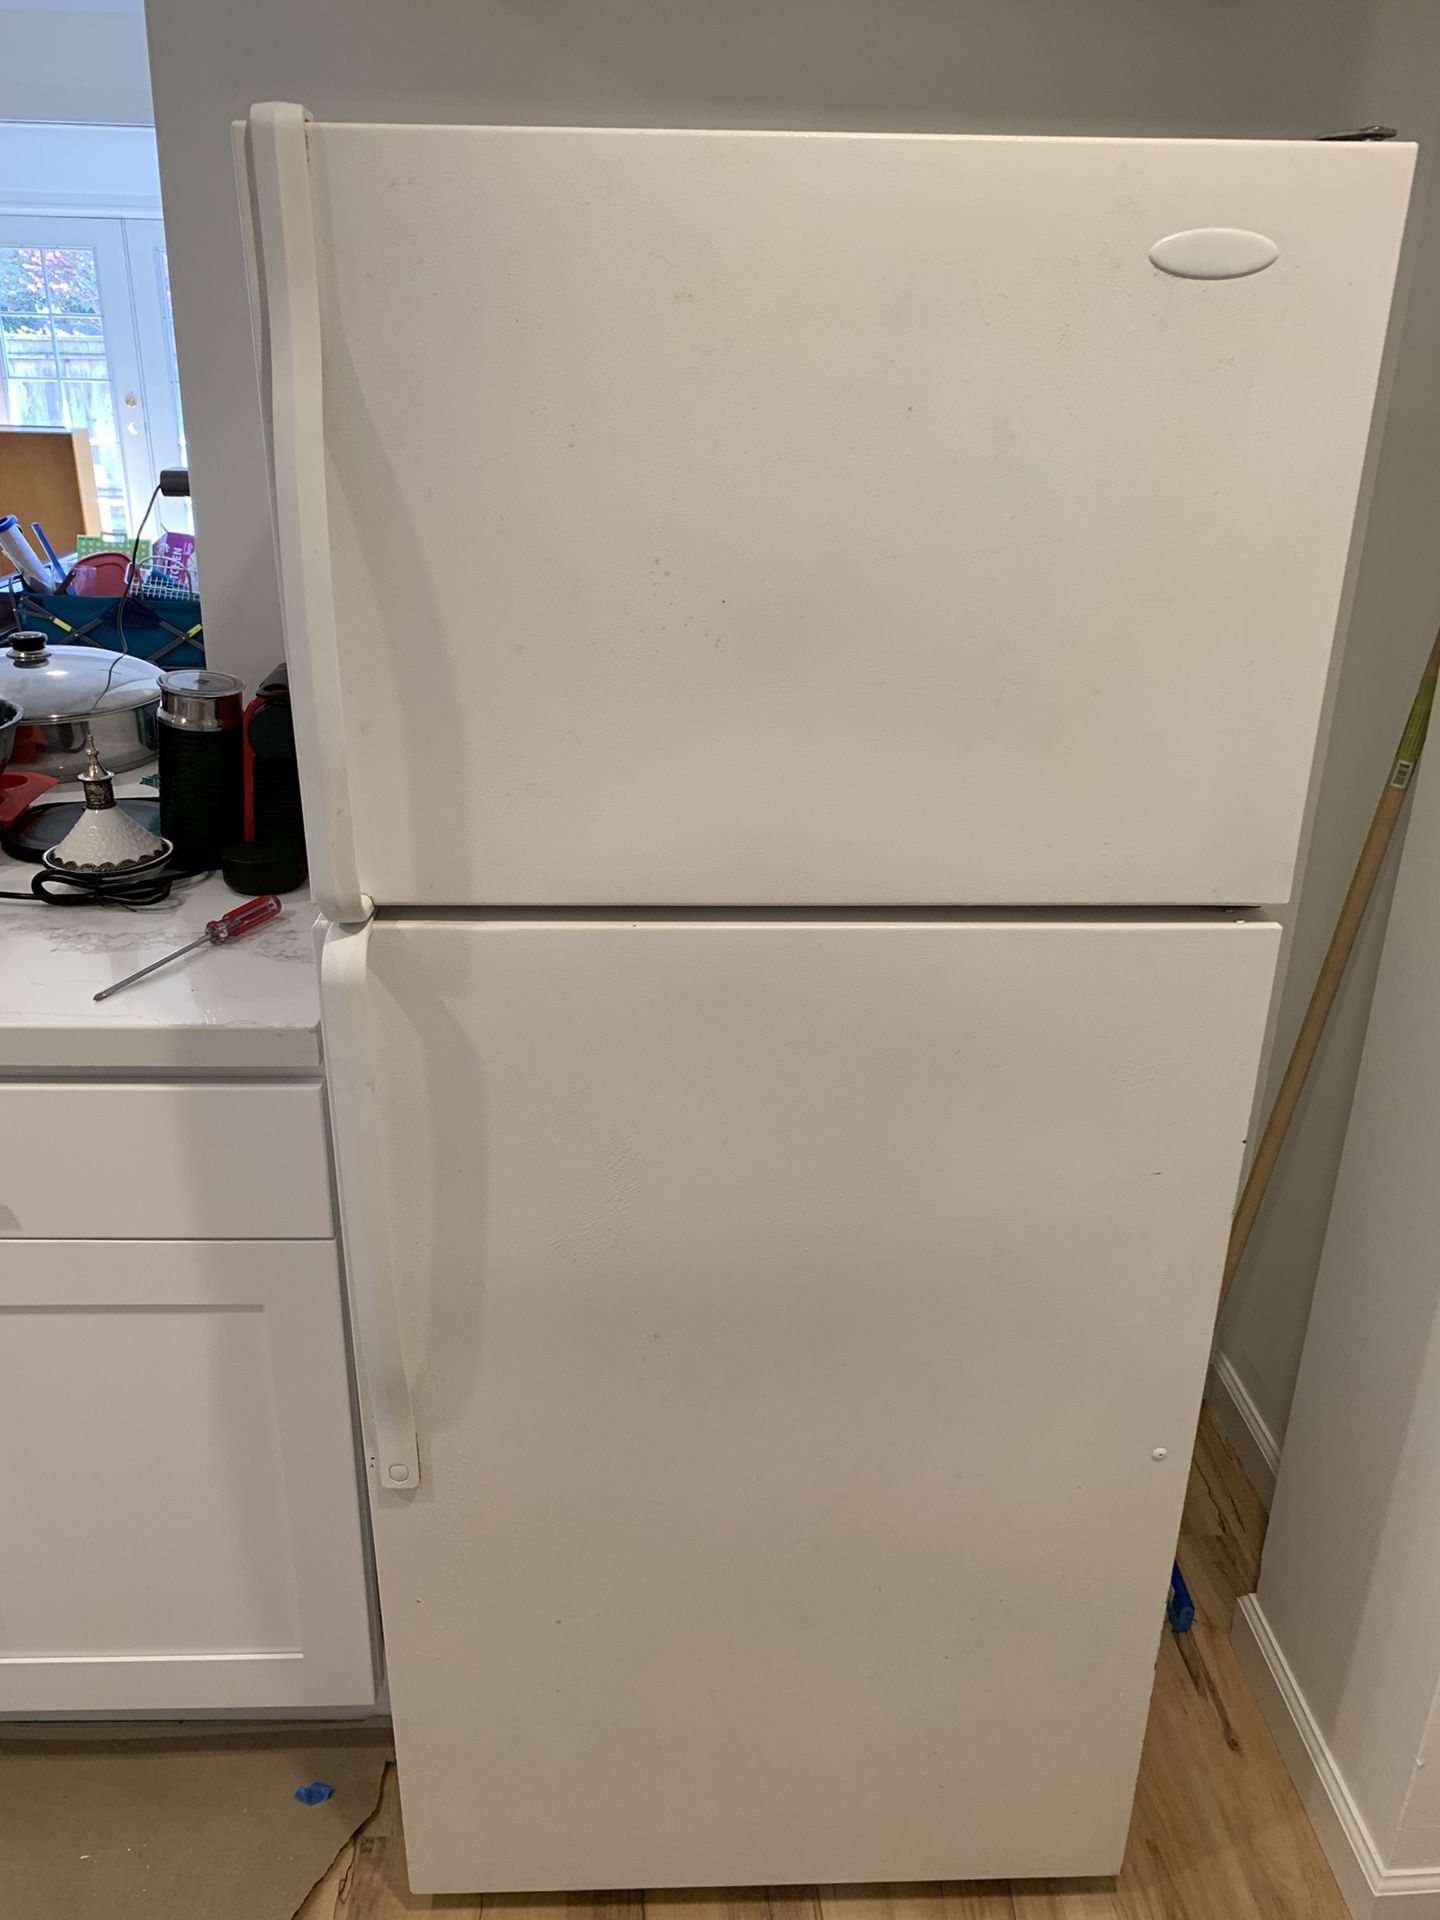 Refrigerator for sale!